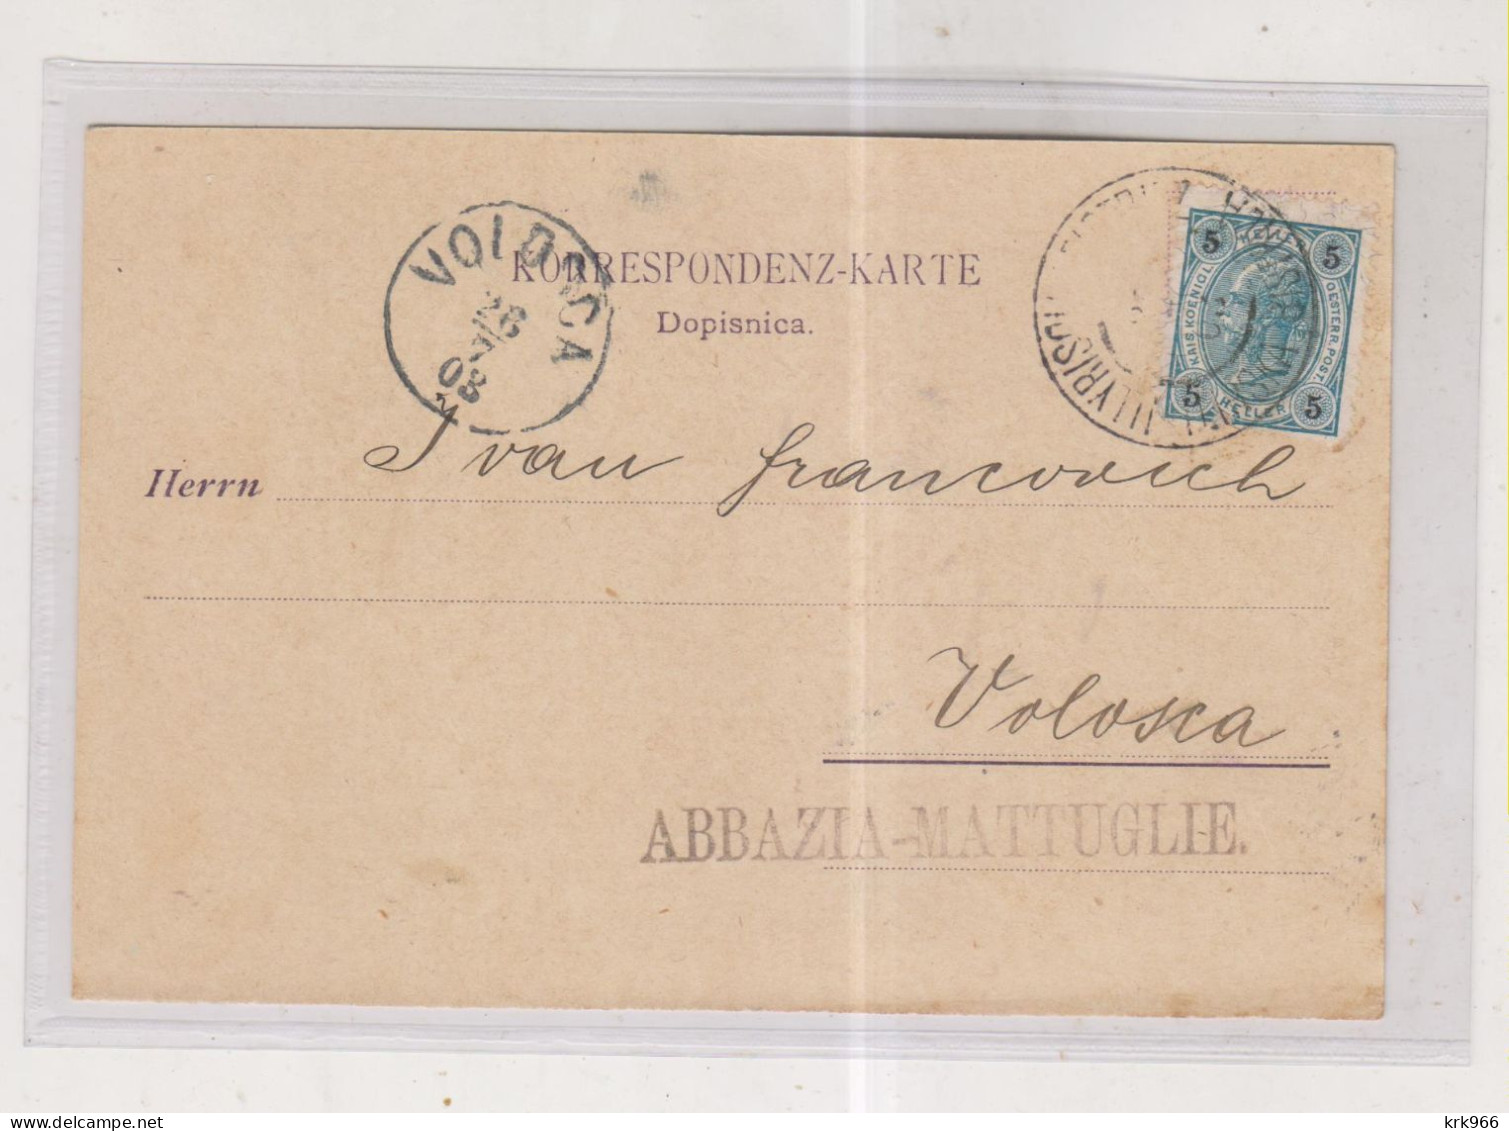 SLOVENIA AUSTRIA 1903 ILIRSKA BISTRICA Nice Postcard To Volosca Volosko Croatia - Eslovenia